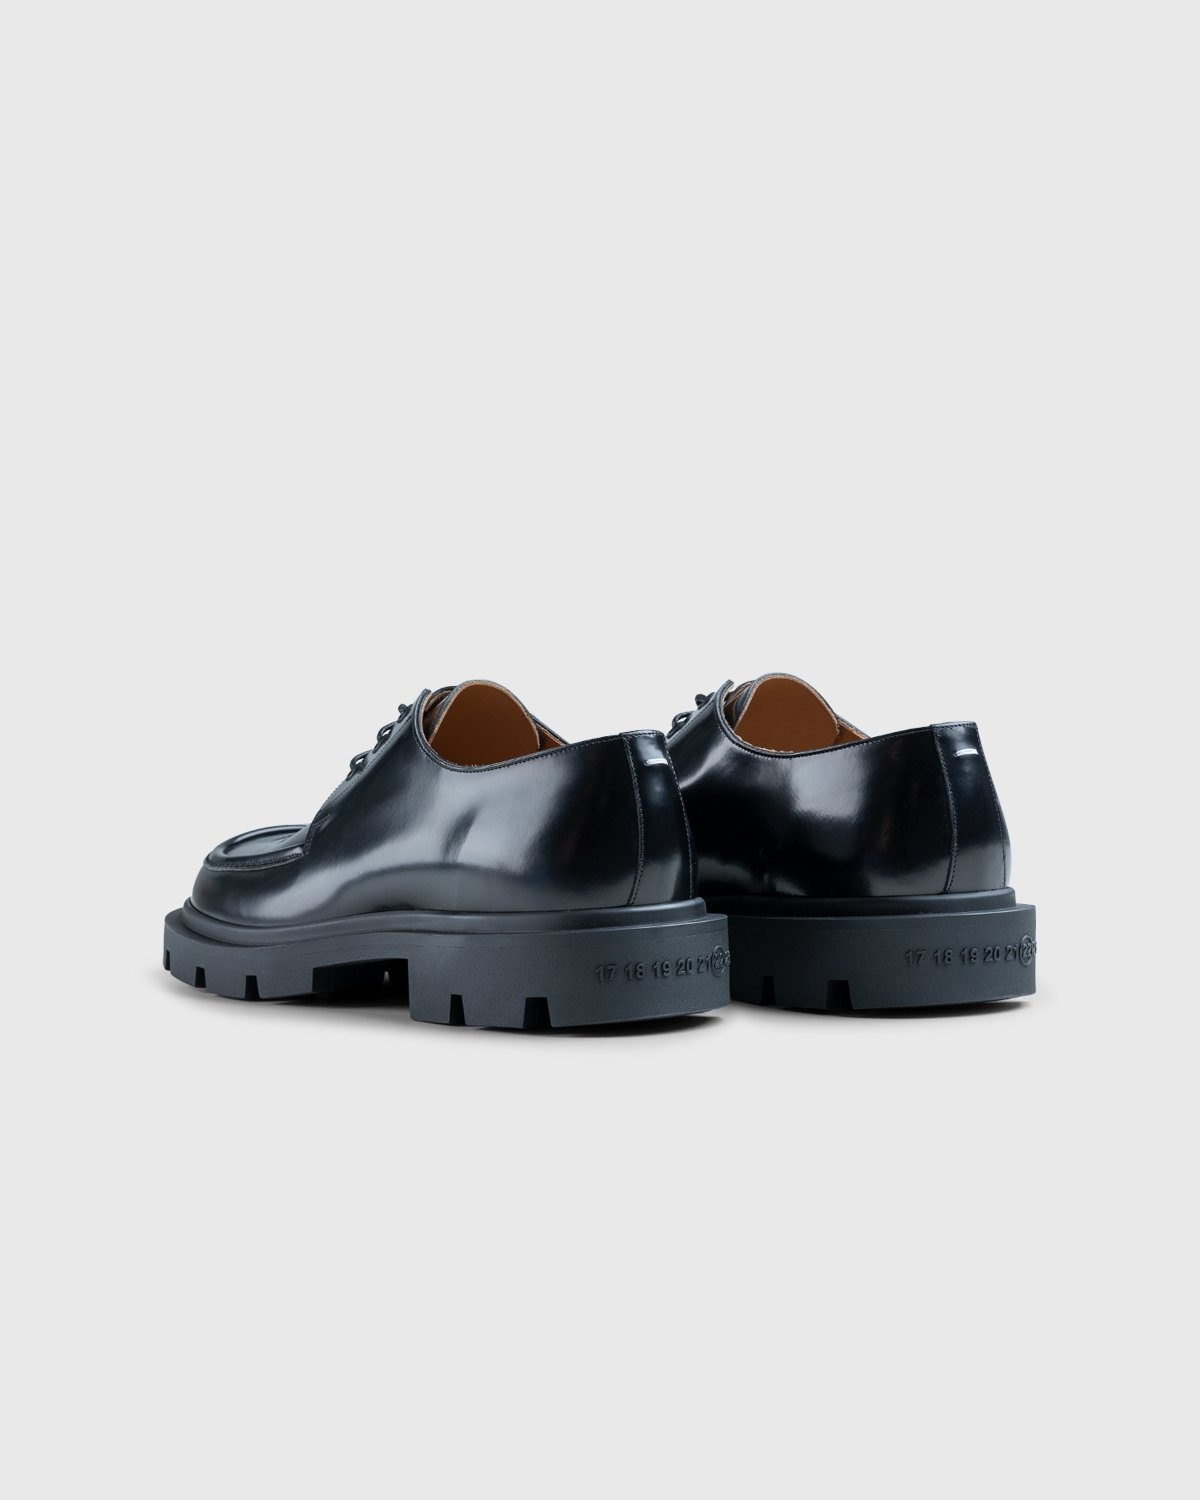 Maison Margiela – Cleated Sole Shoes Black - Oxfords & Lace Ups - Black - Image 3